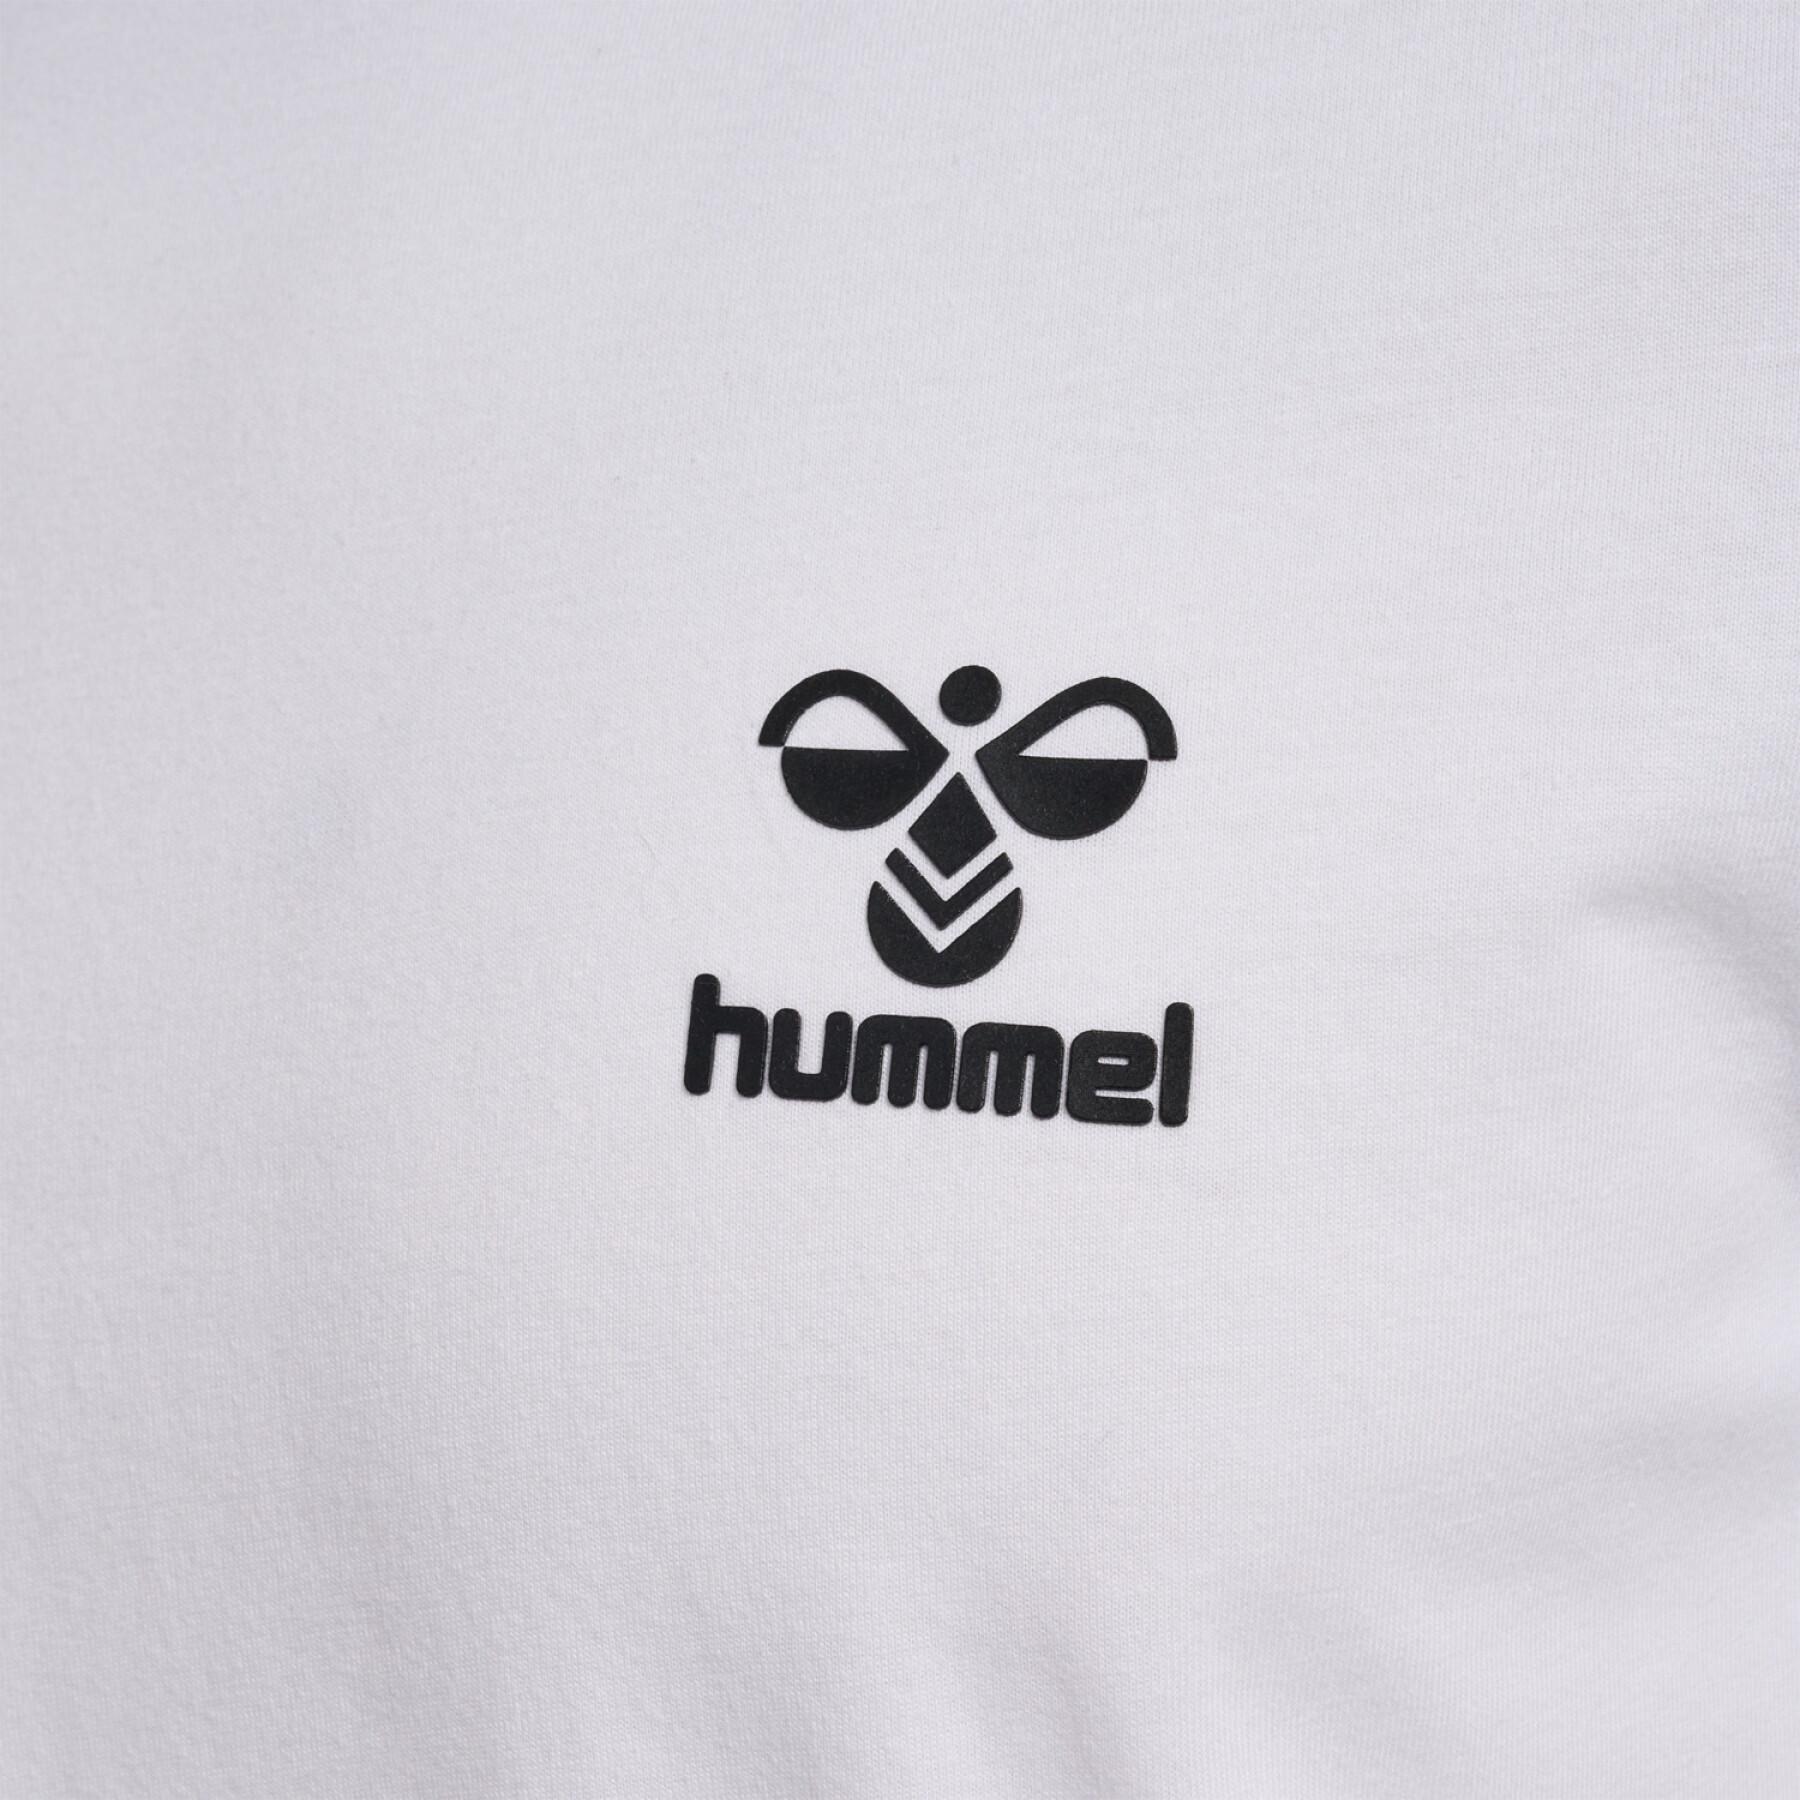 T-shirt - Brands Lifestyle - Hummel - Hummel Icons